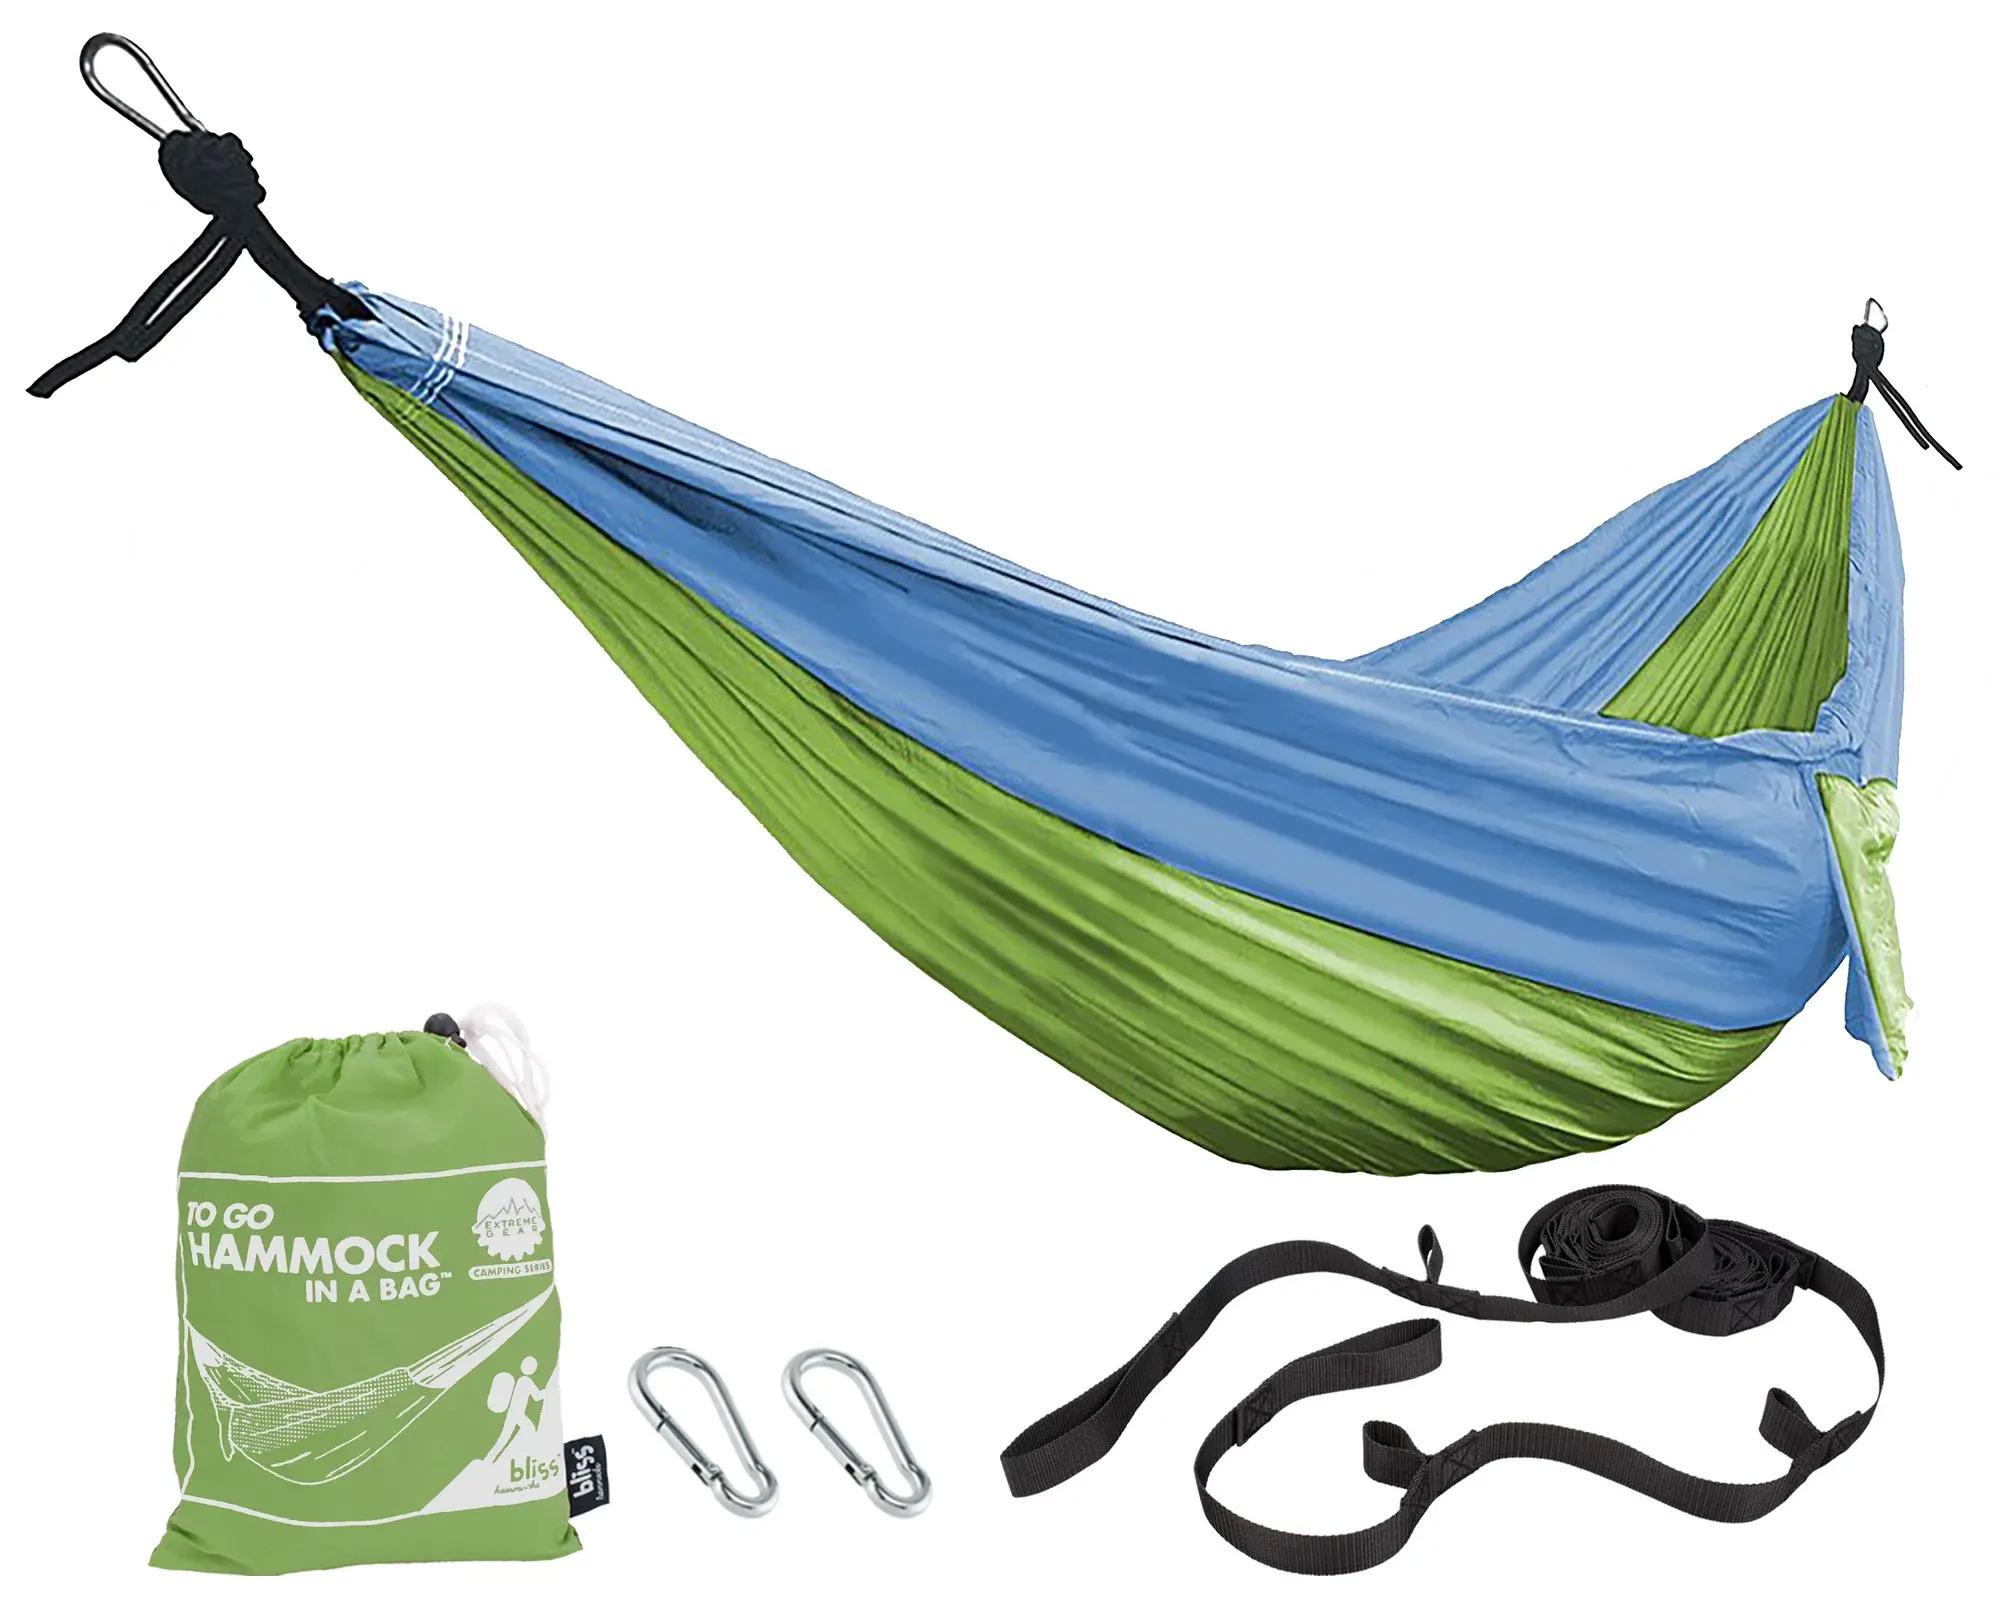 Bliss Hammocks Portable Travel Camping Hammock in a Bag for $9.99